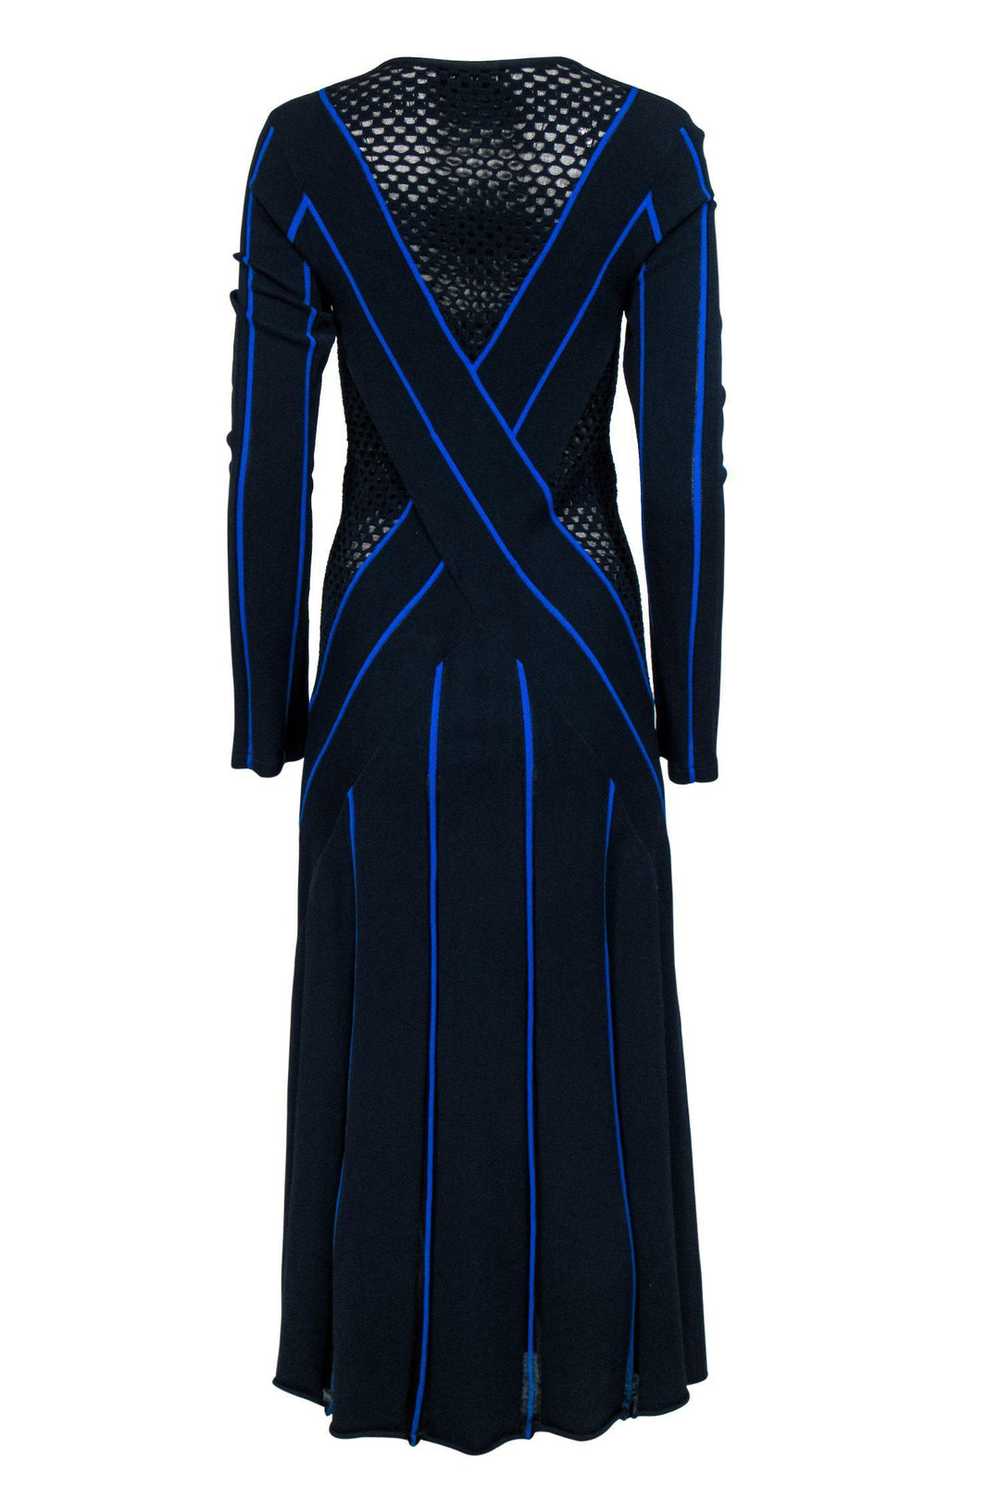 Prabal Gurung - Blue Knit Maxi Dress w/ Netted Ac… - image 3